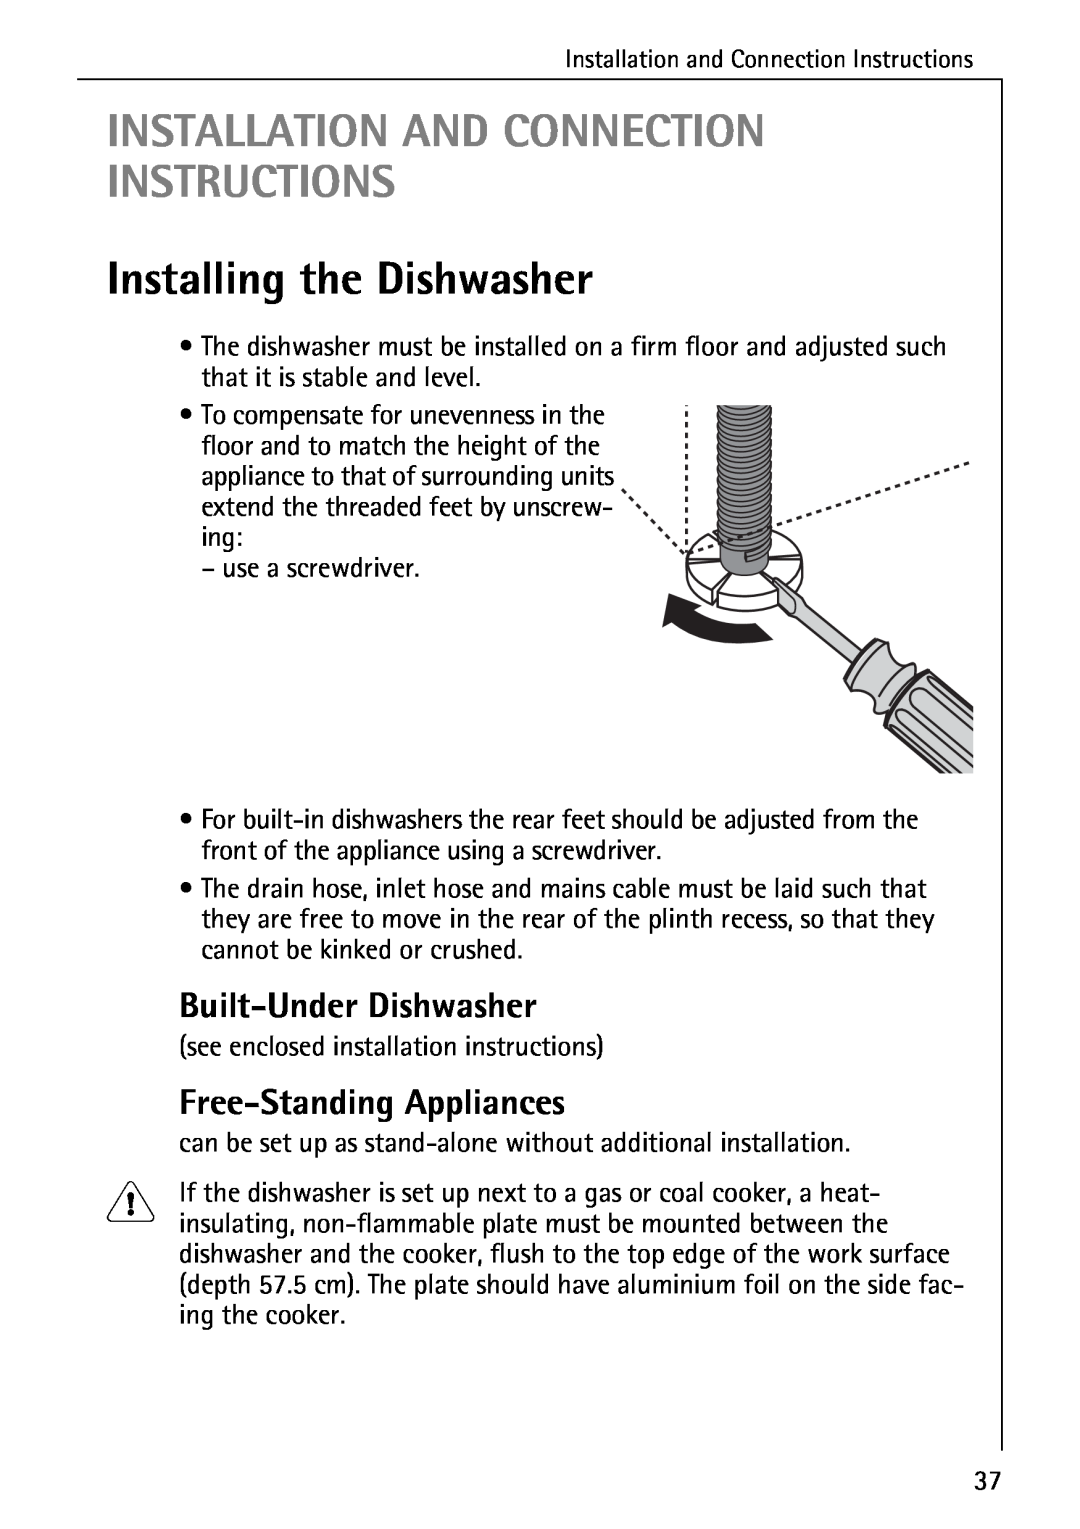 AEG 40740 manual Installation And Connection Instructions, Installing the Dishwasher, Built-Under Dishwasher 